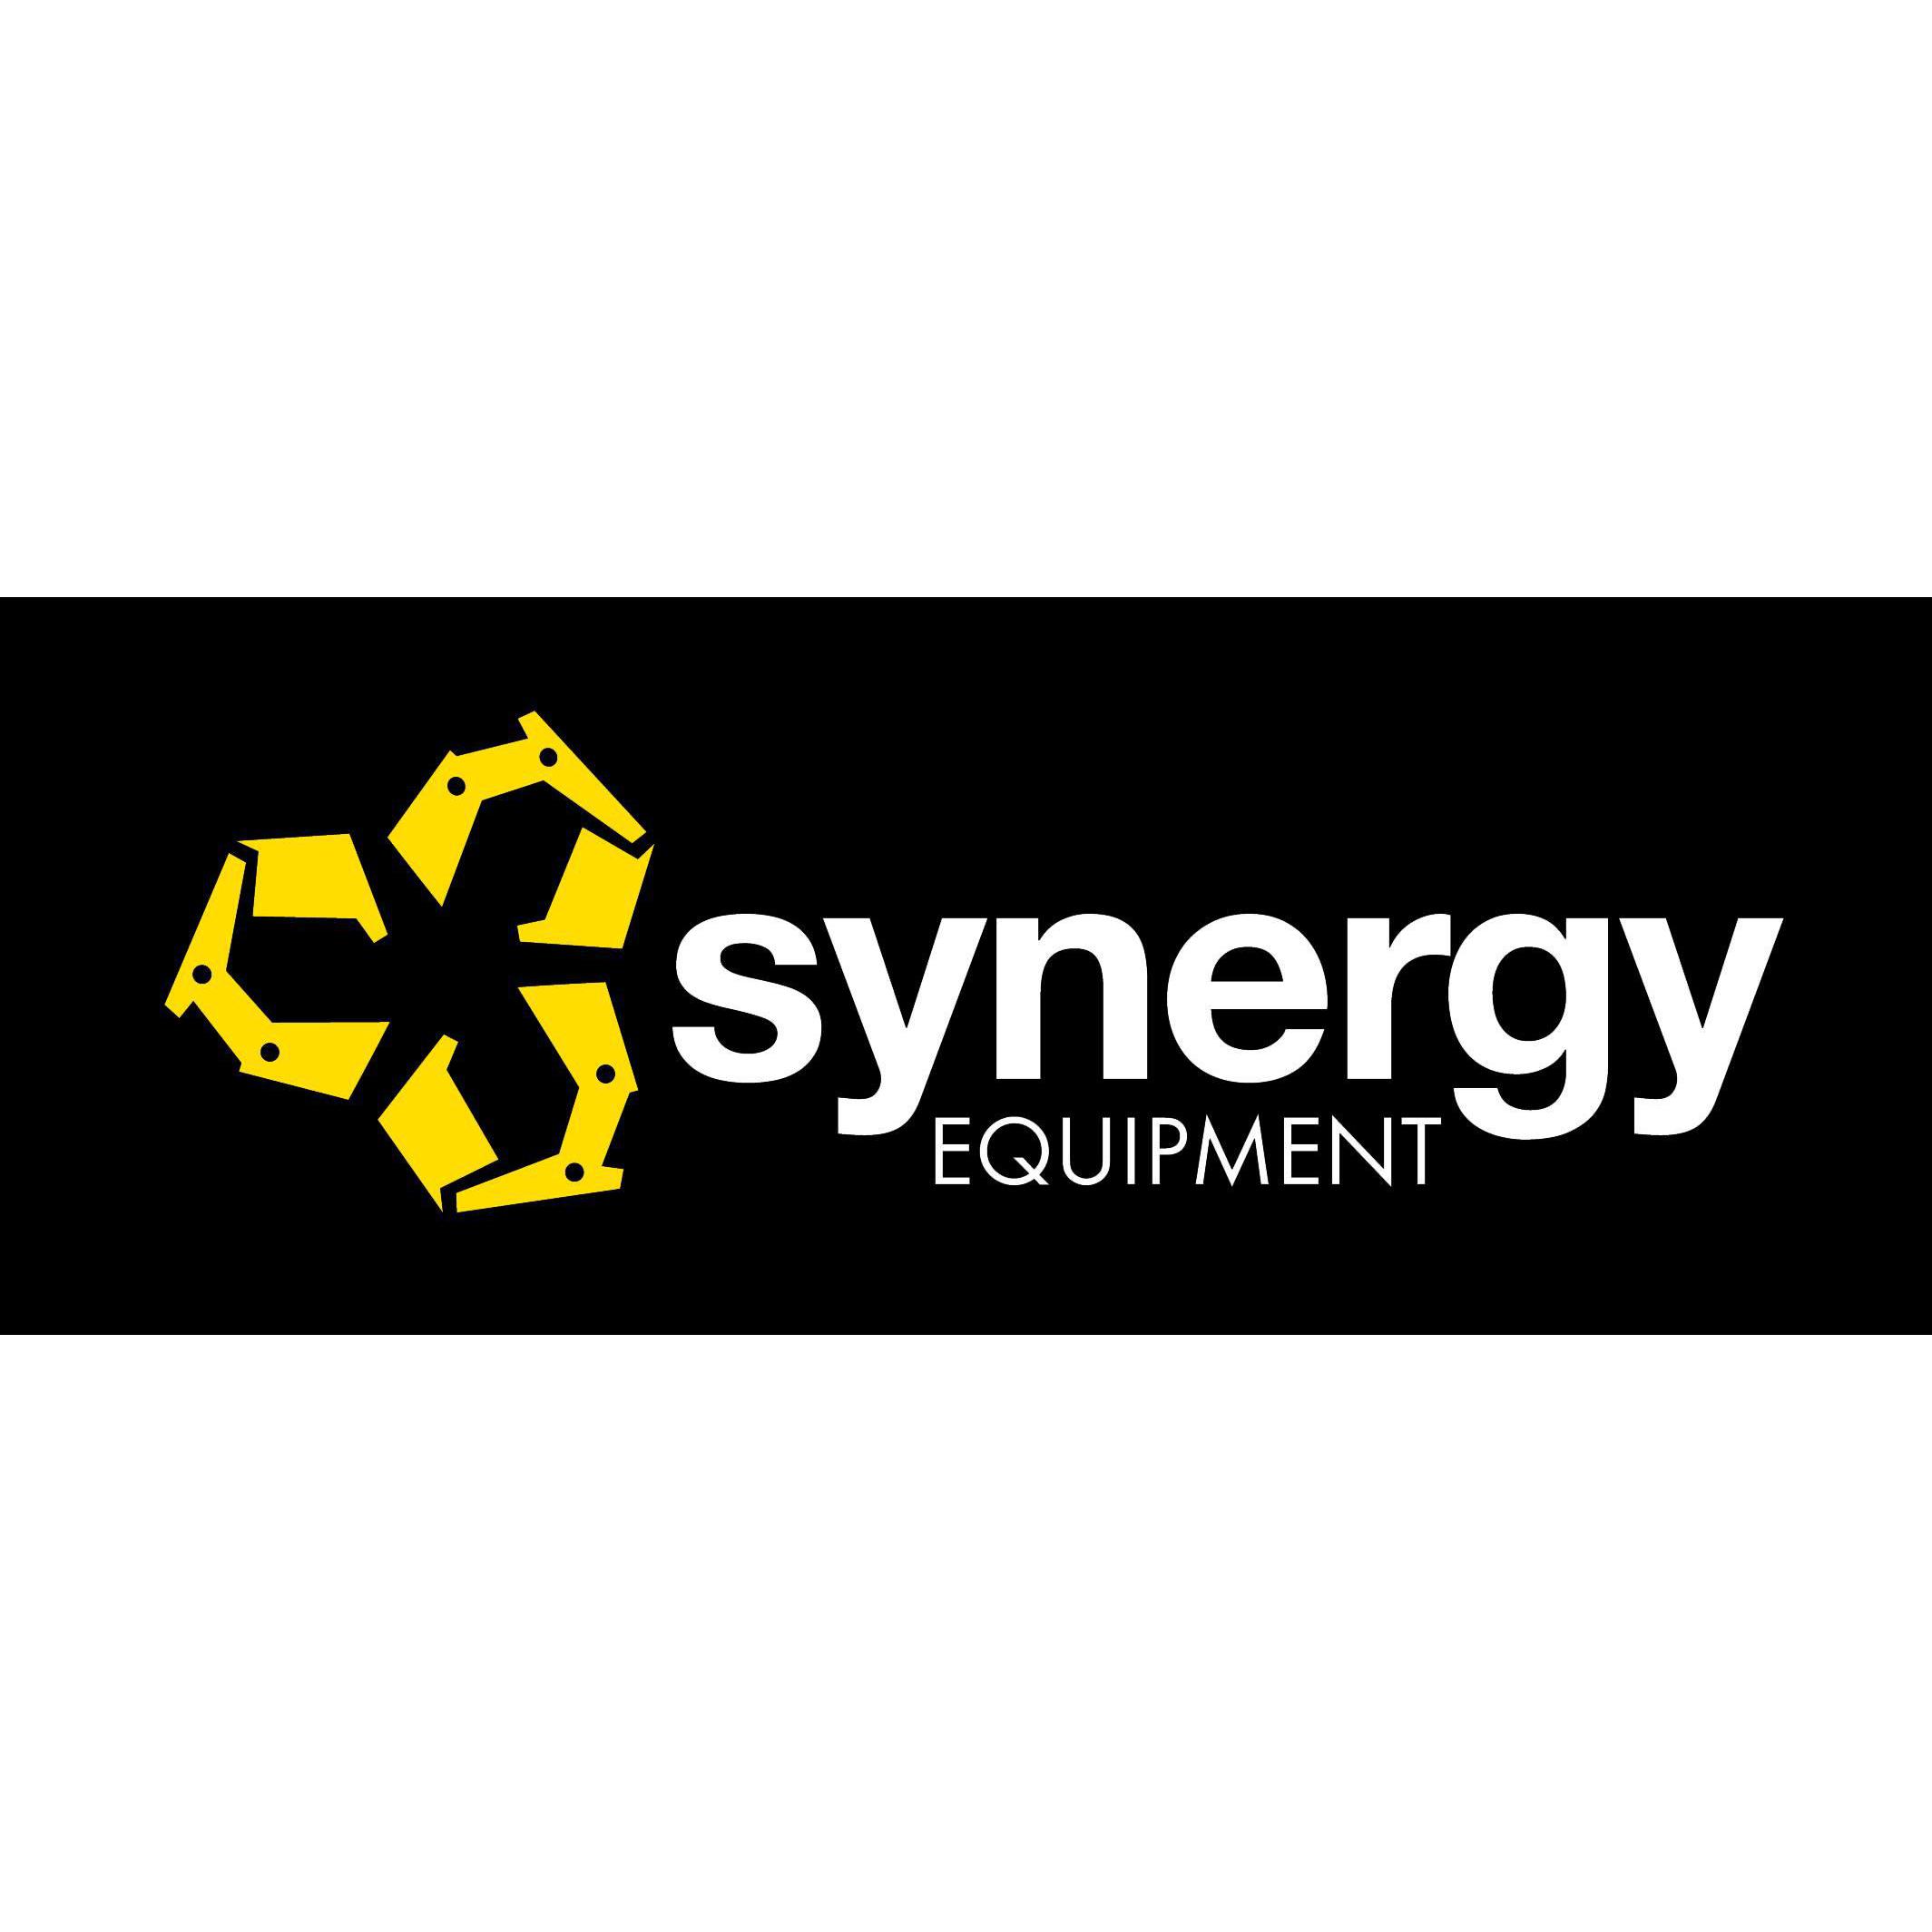 Synergy Equipment Rental Orlando